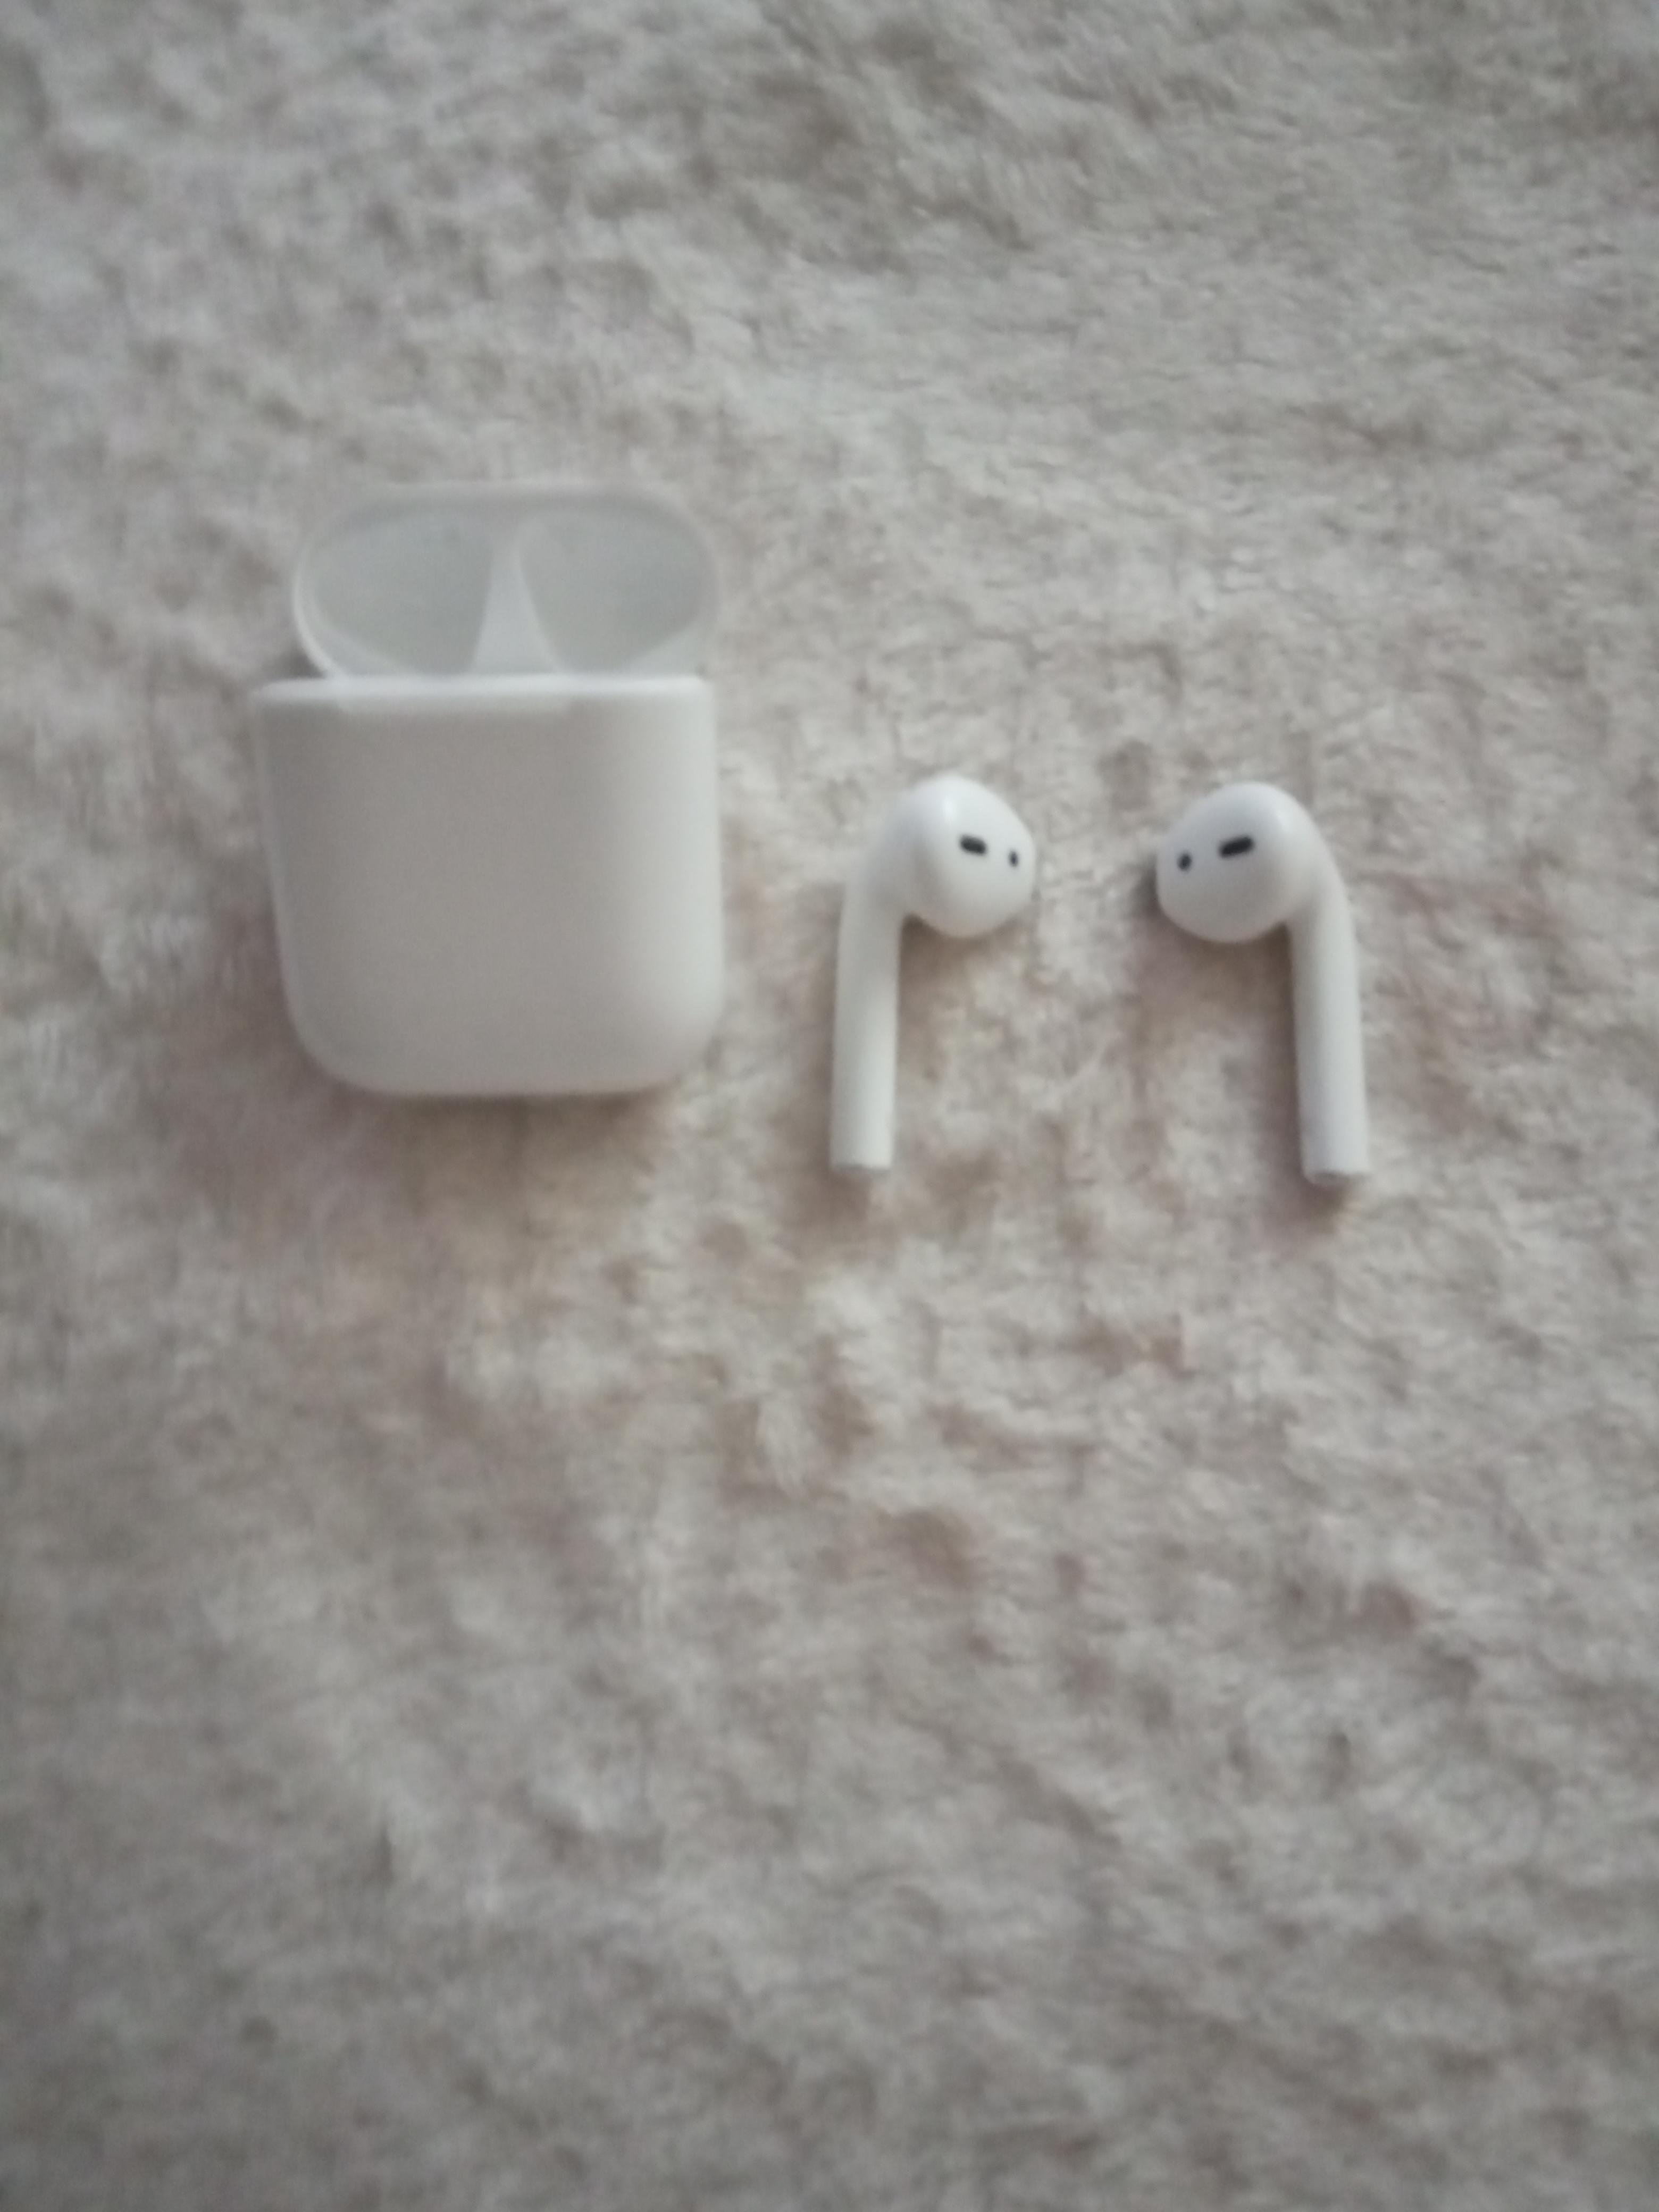 mv7n2ru a earpods with charging case